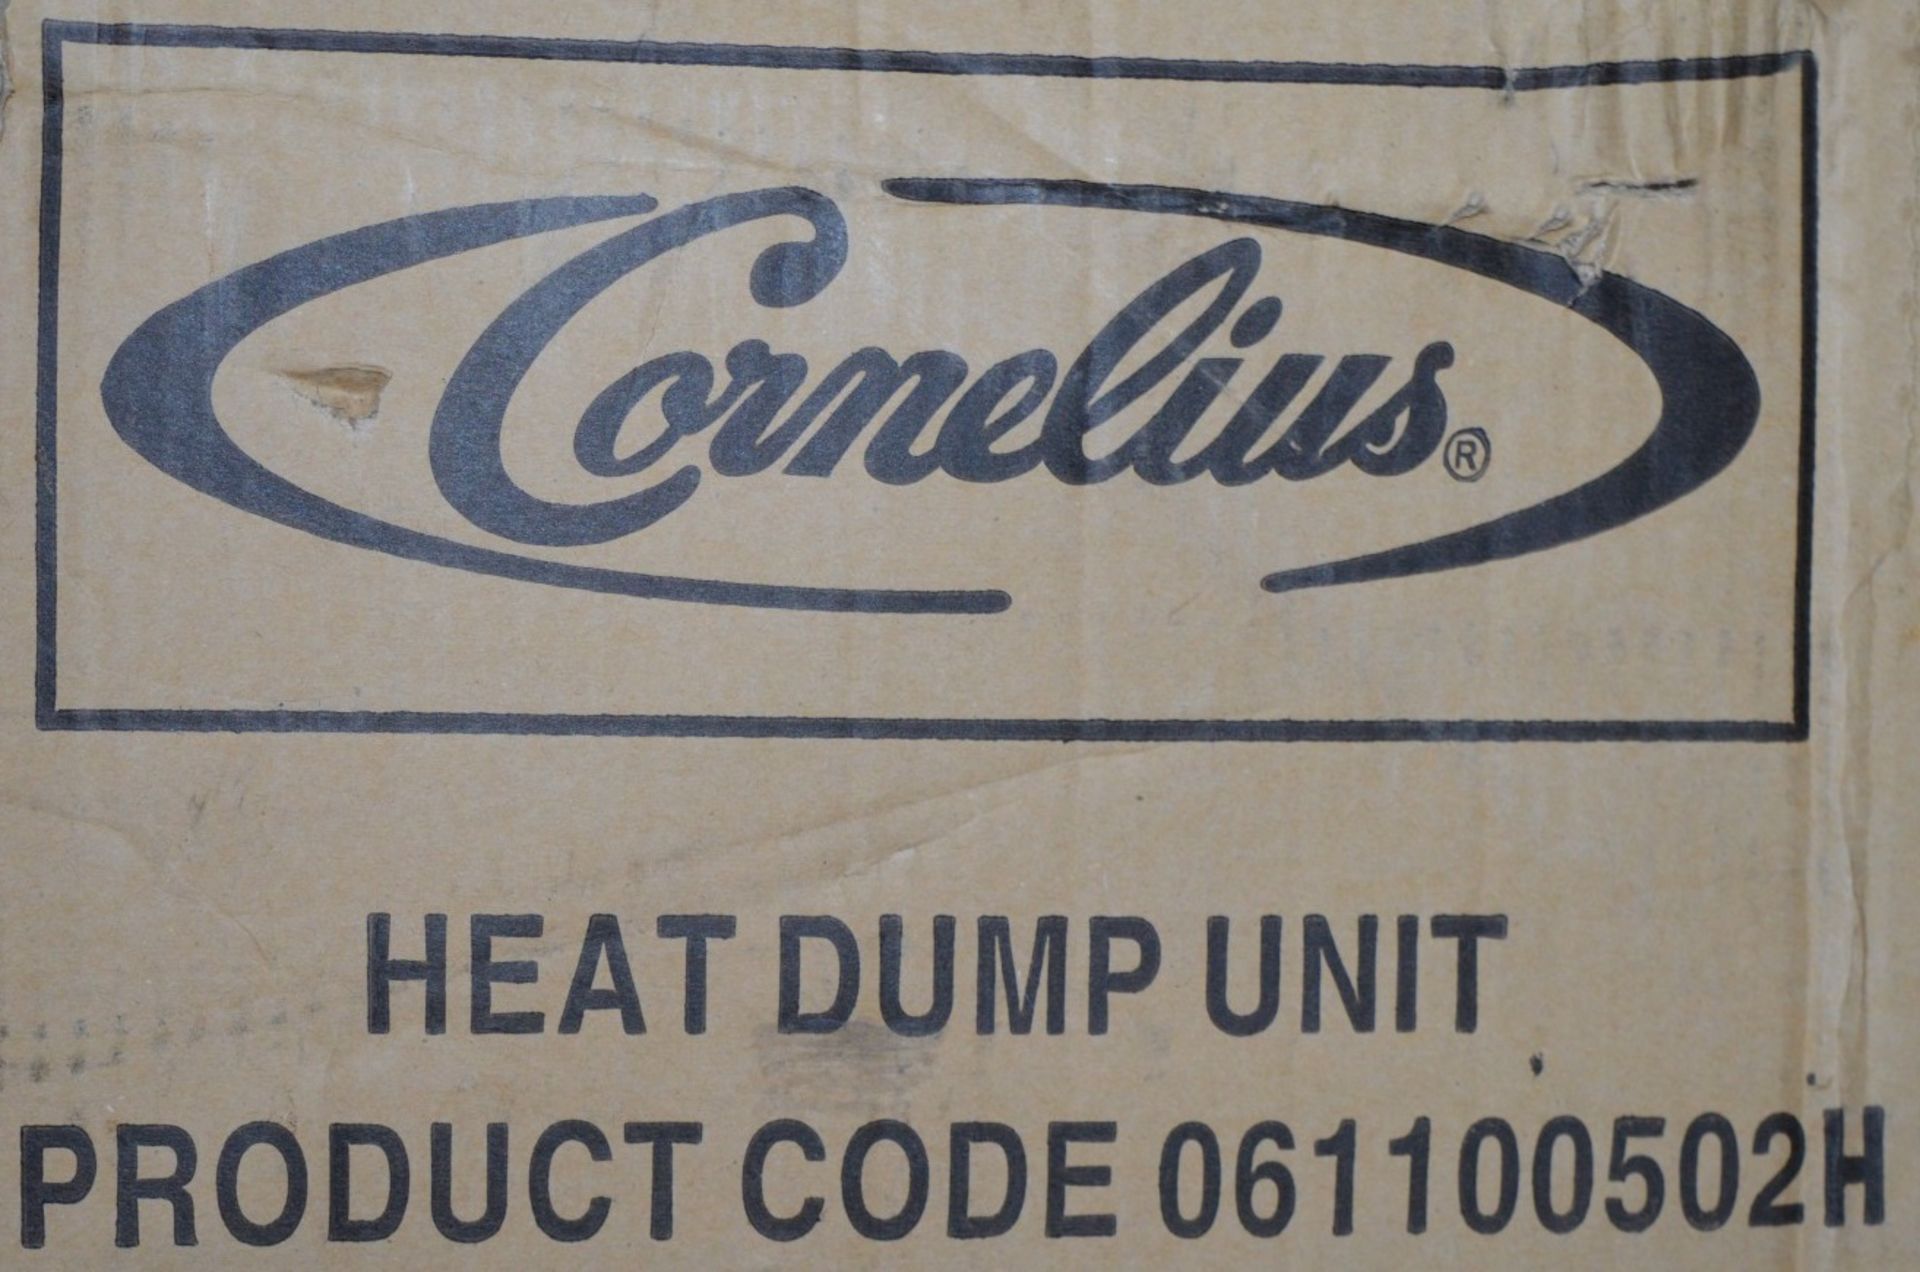 1 x Cornelius Heat Dump Unit For Cooled Split Cooling Systems - Model 061100502H - CL011 - Ref IT241 - Image 5 of 8